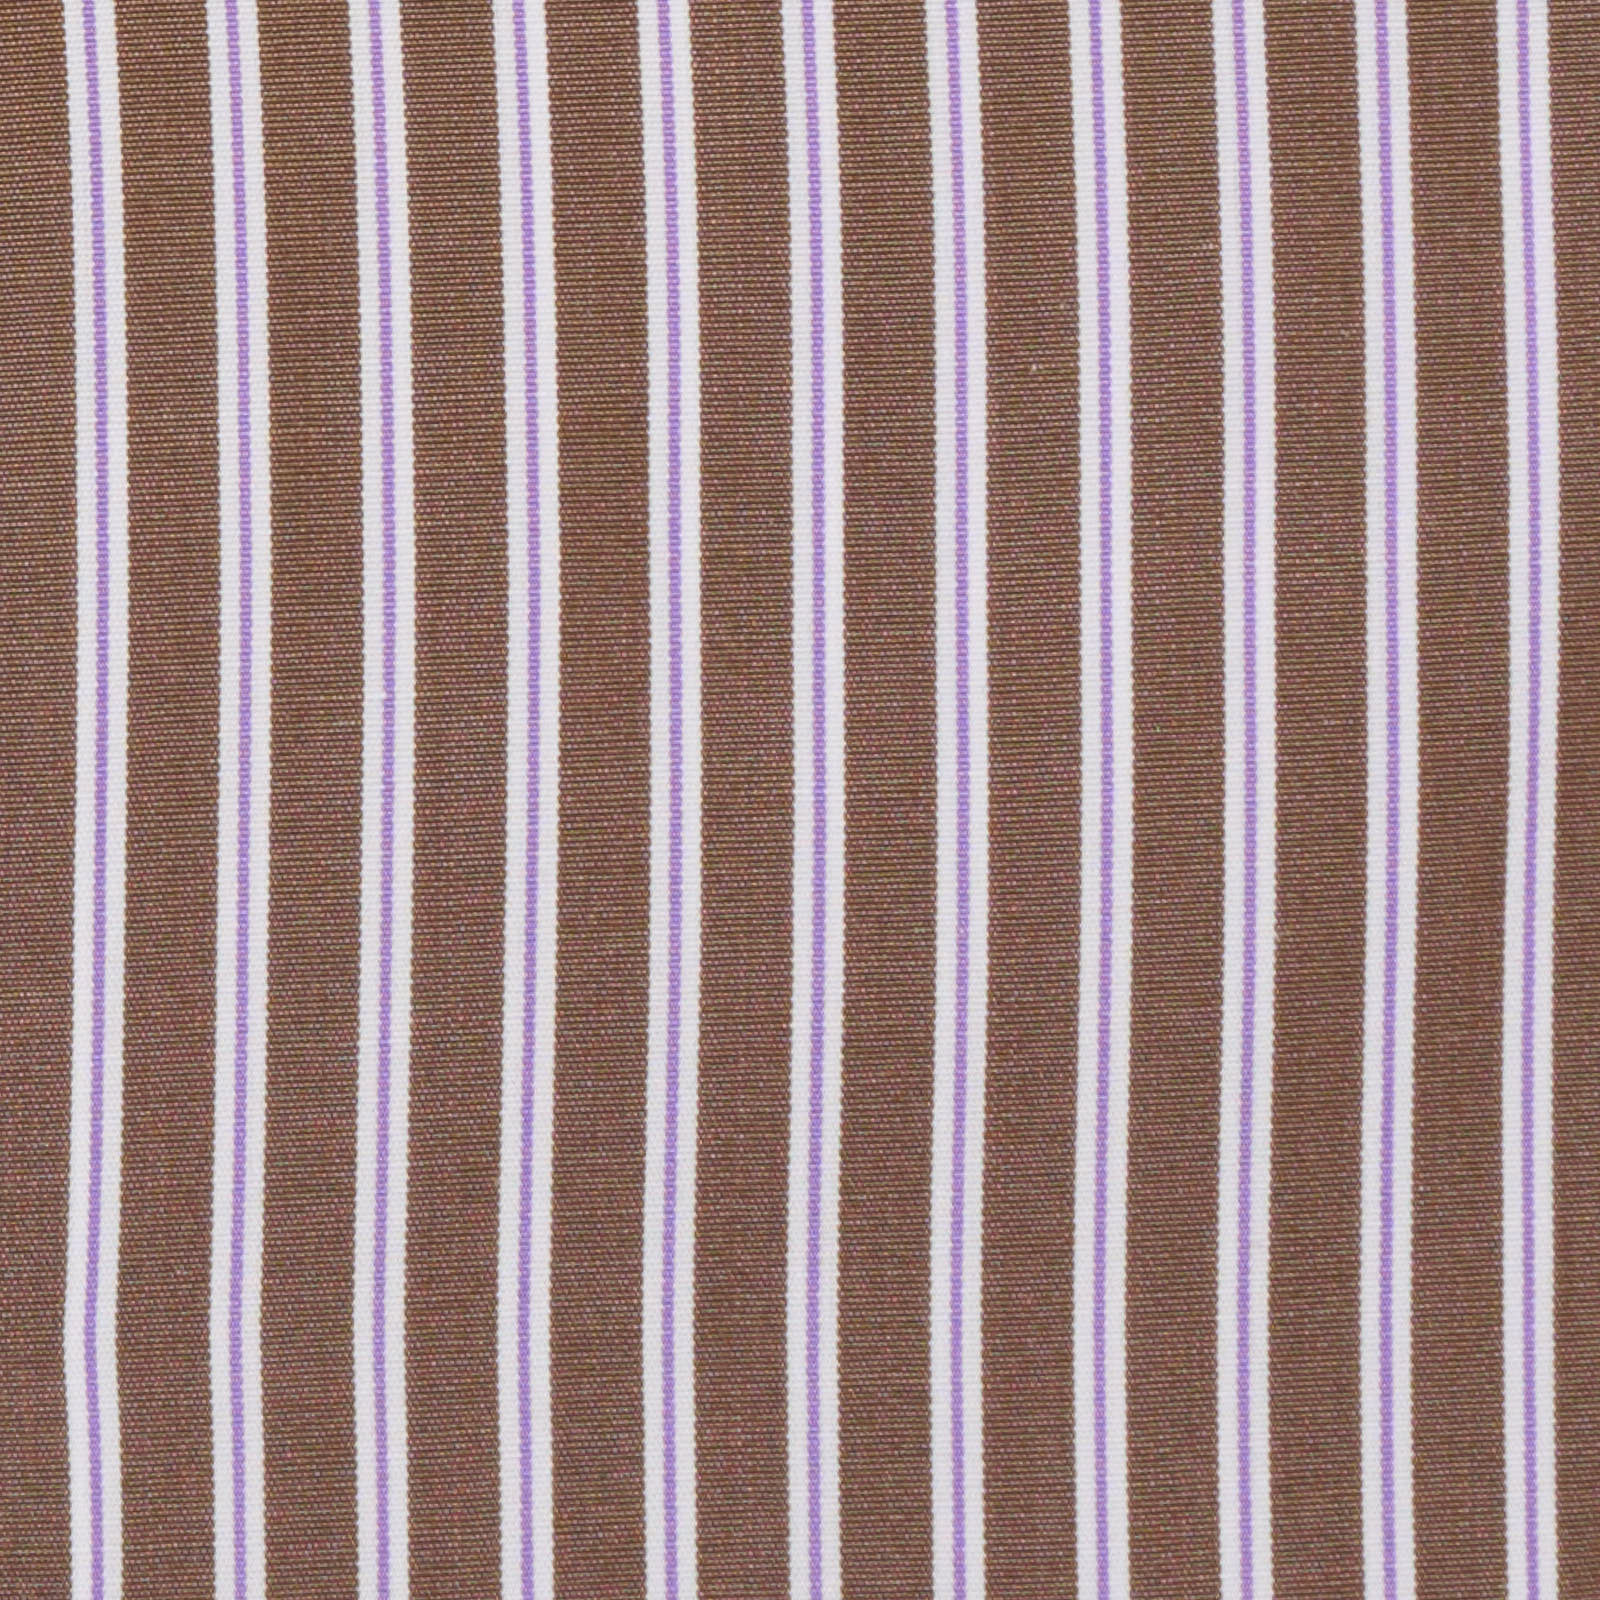 VANNUCCI Milano Brown Striped Cotton Dress Shirt EU 40 NEW US 15.75